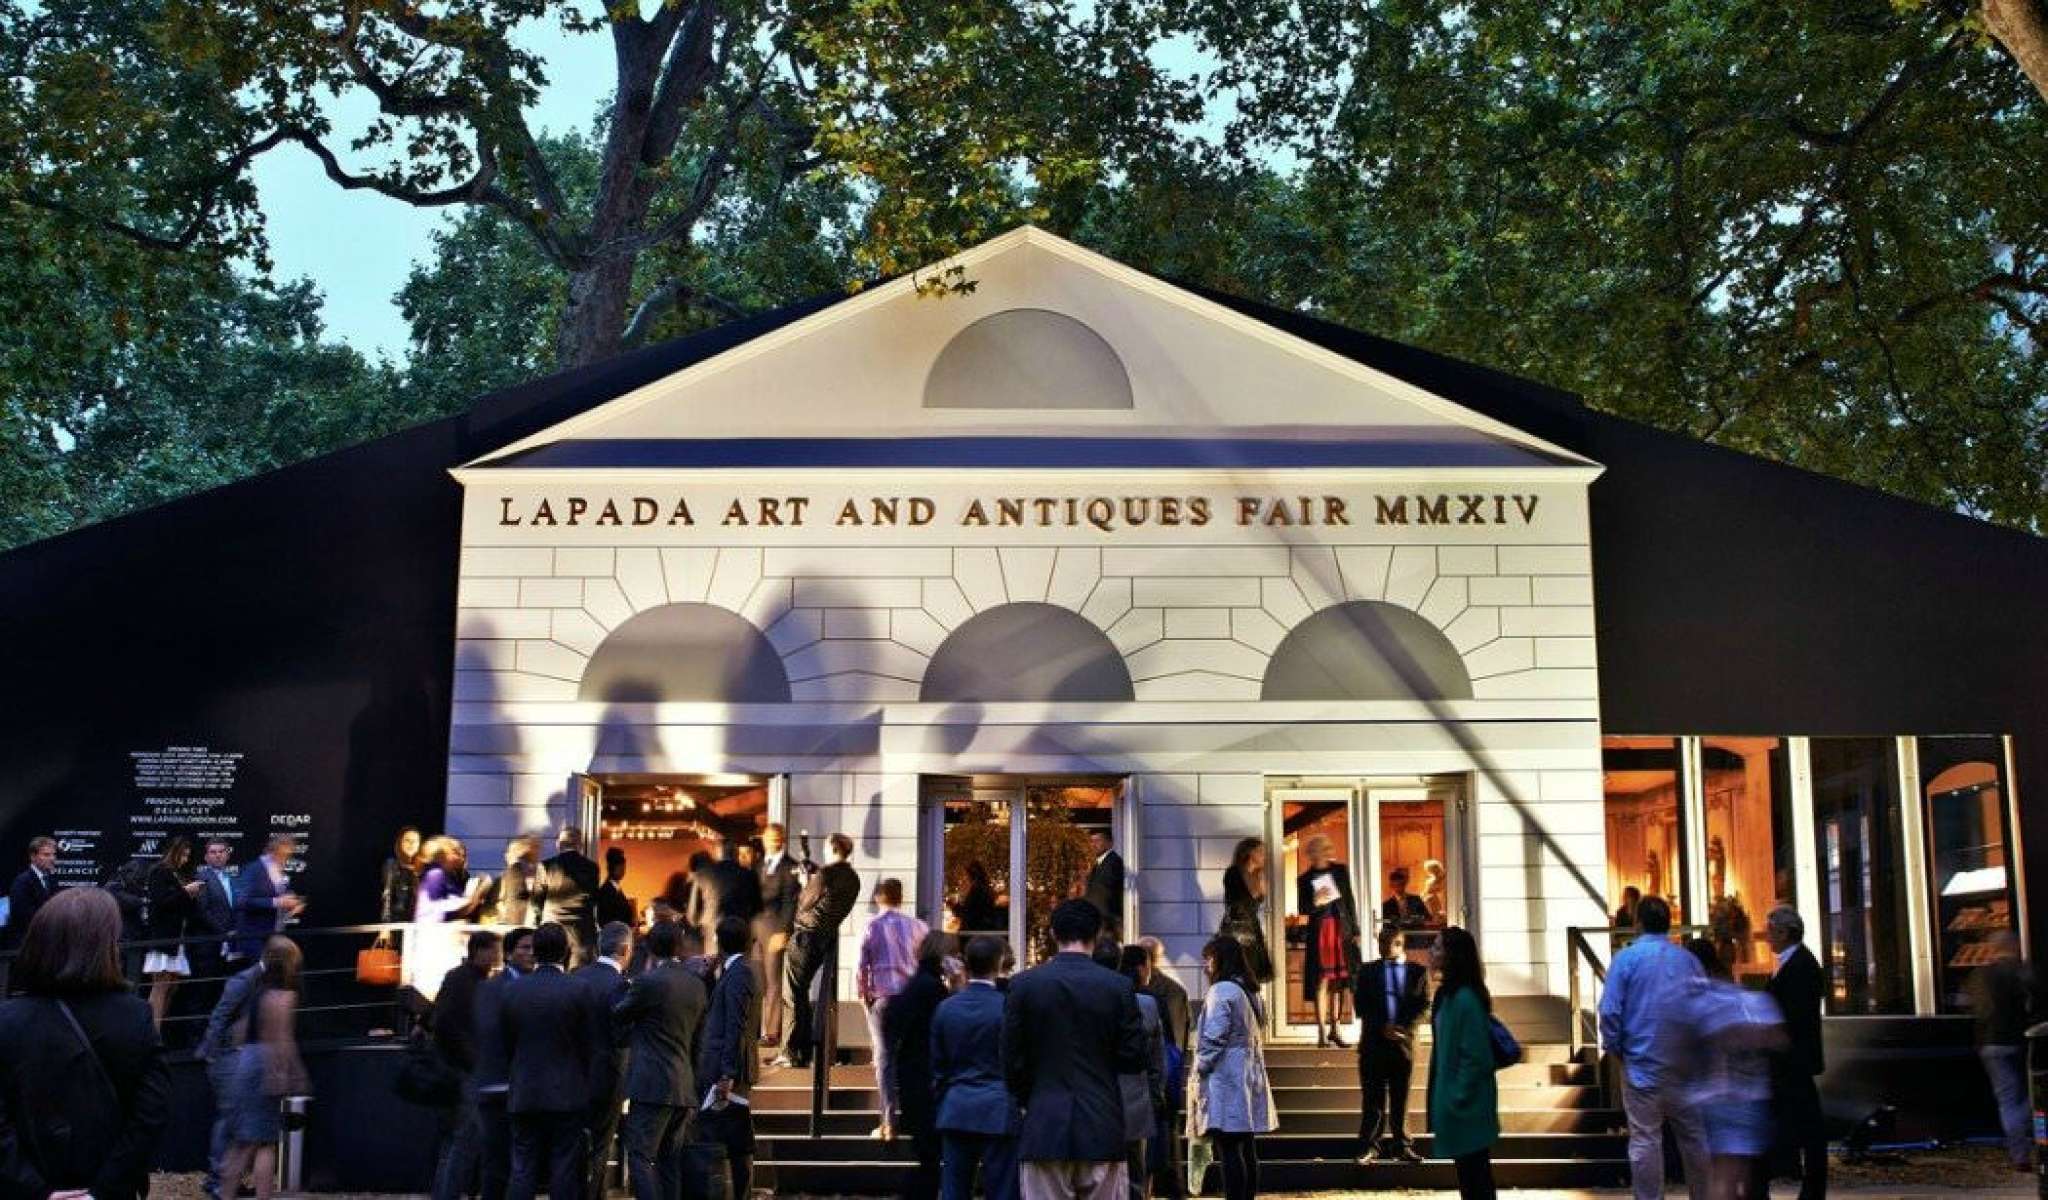 Lapada arts and antiques fair.